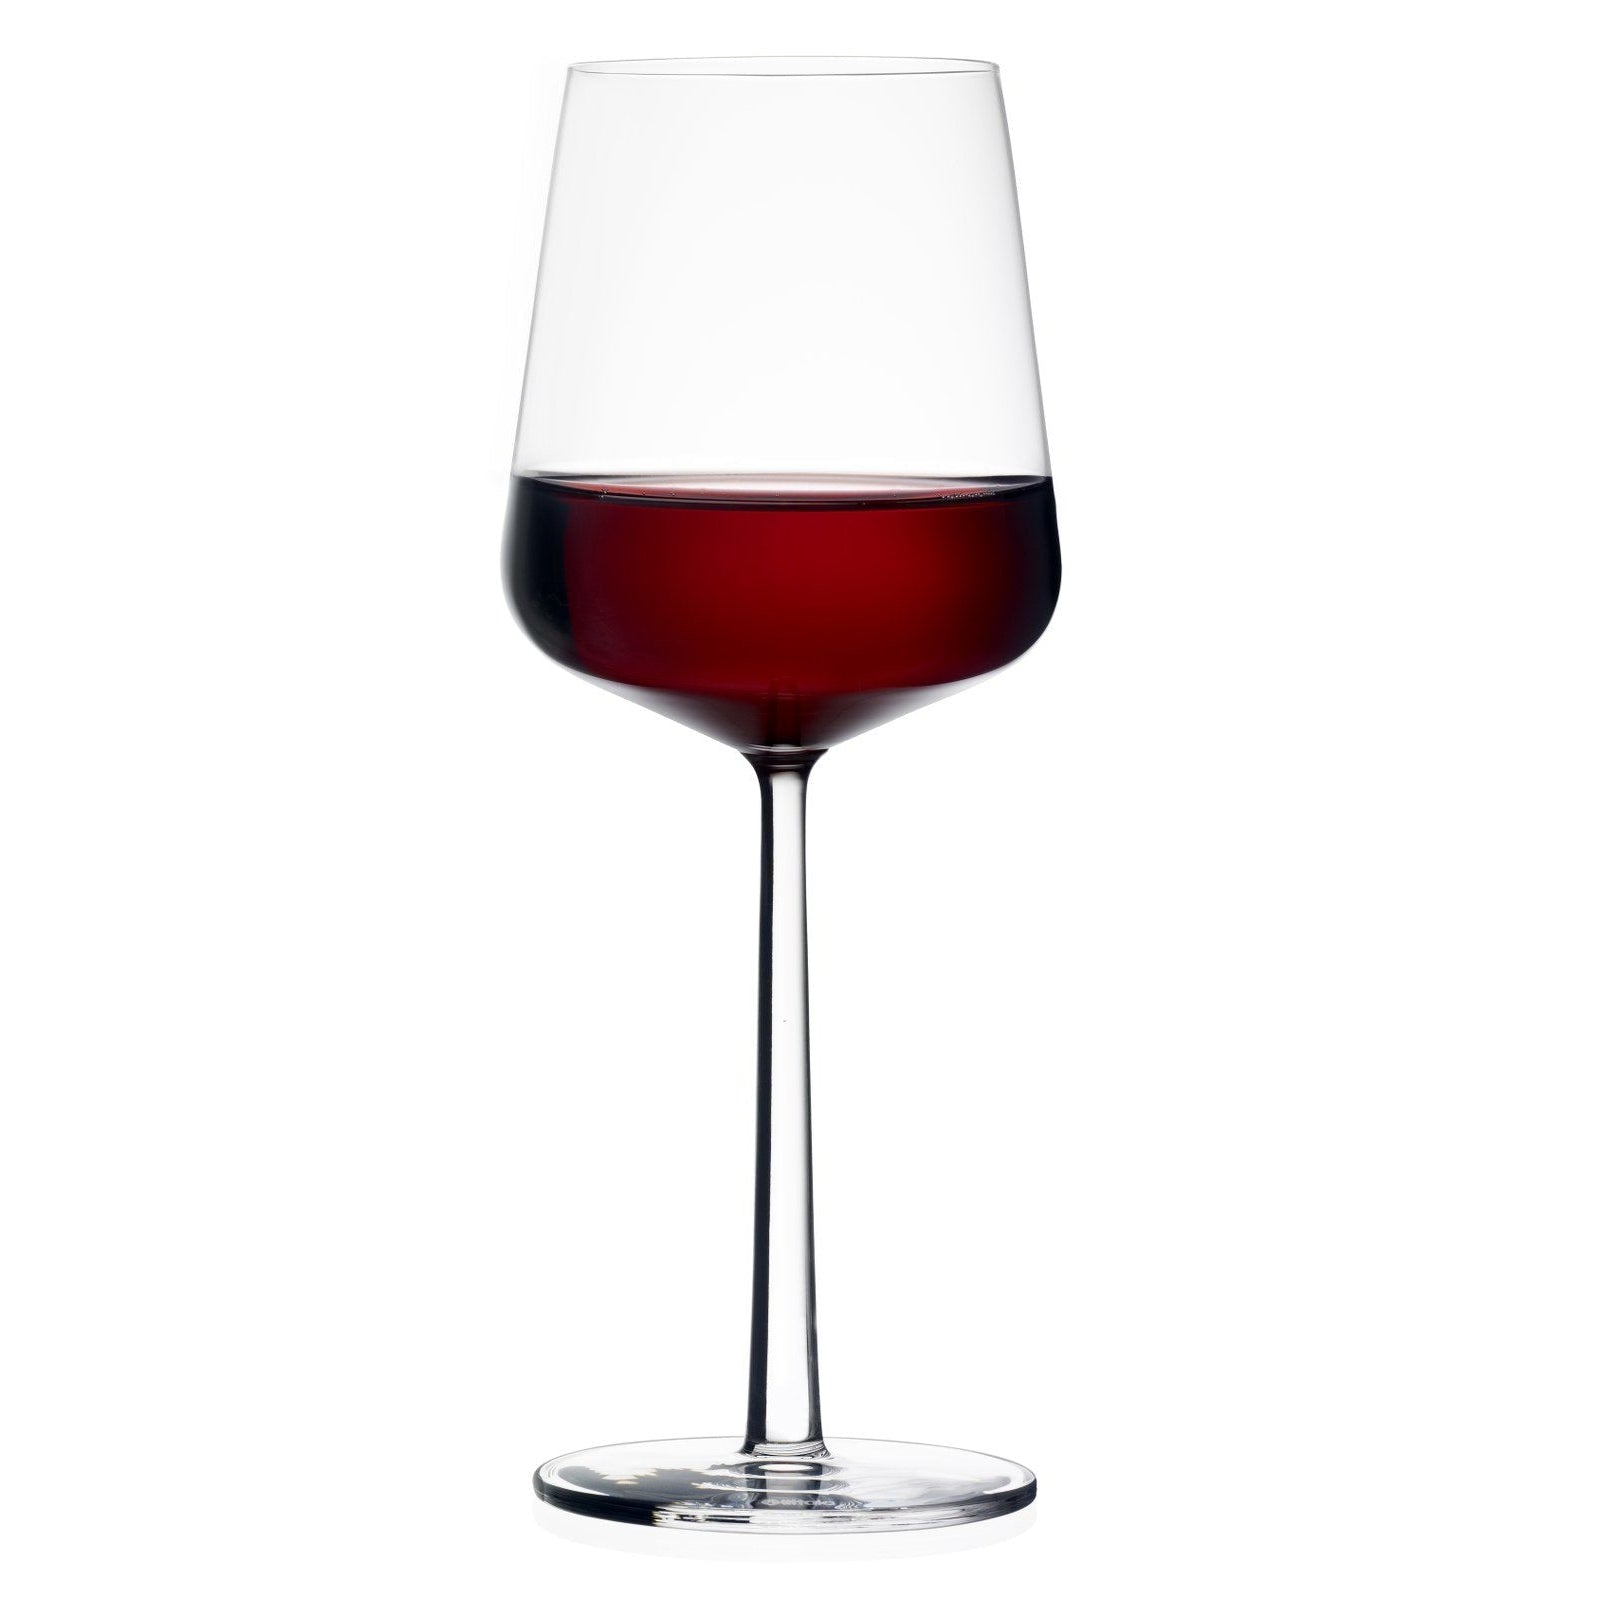 Iittala Essence Red Wine kieliszek 2PCS, 45cl